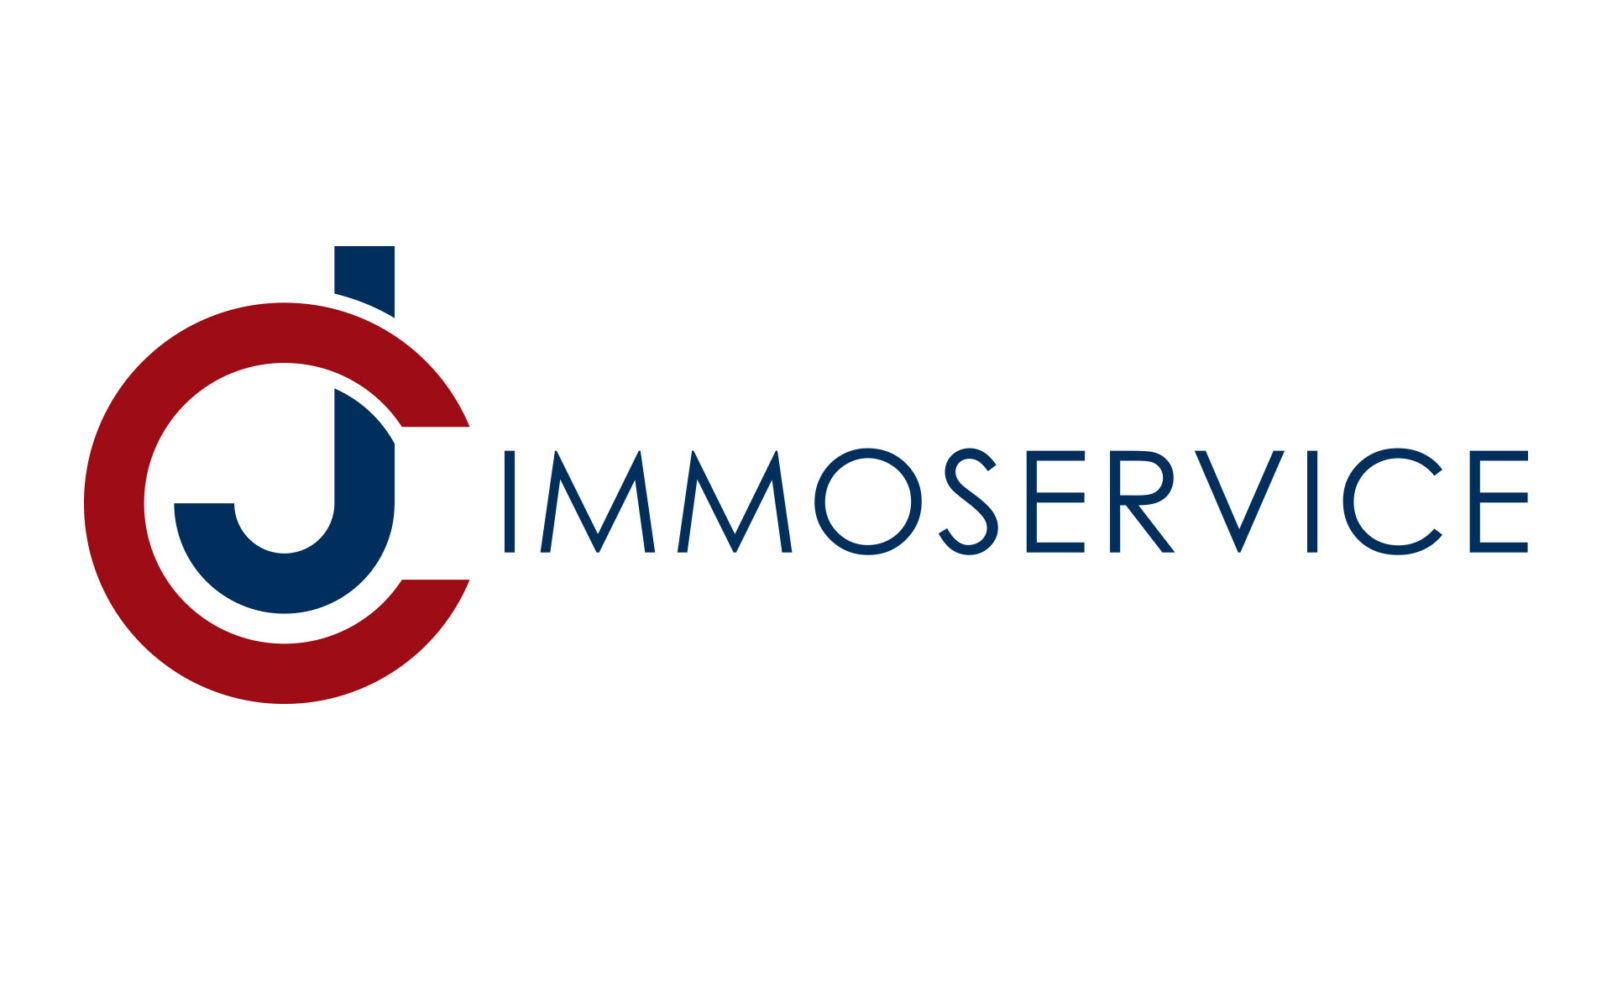 Logoentwicklung Logodesign CJ Immoservice